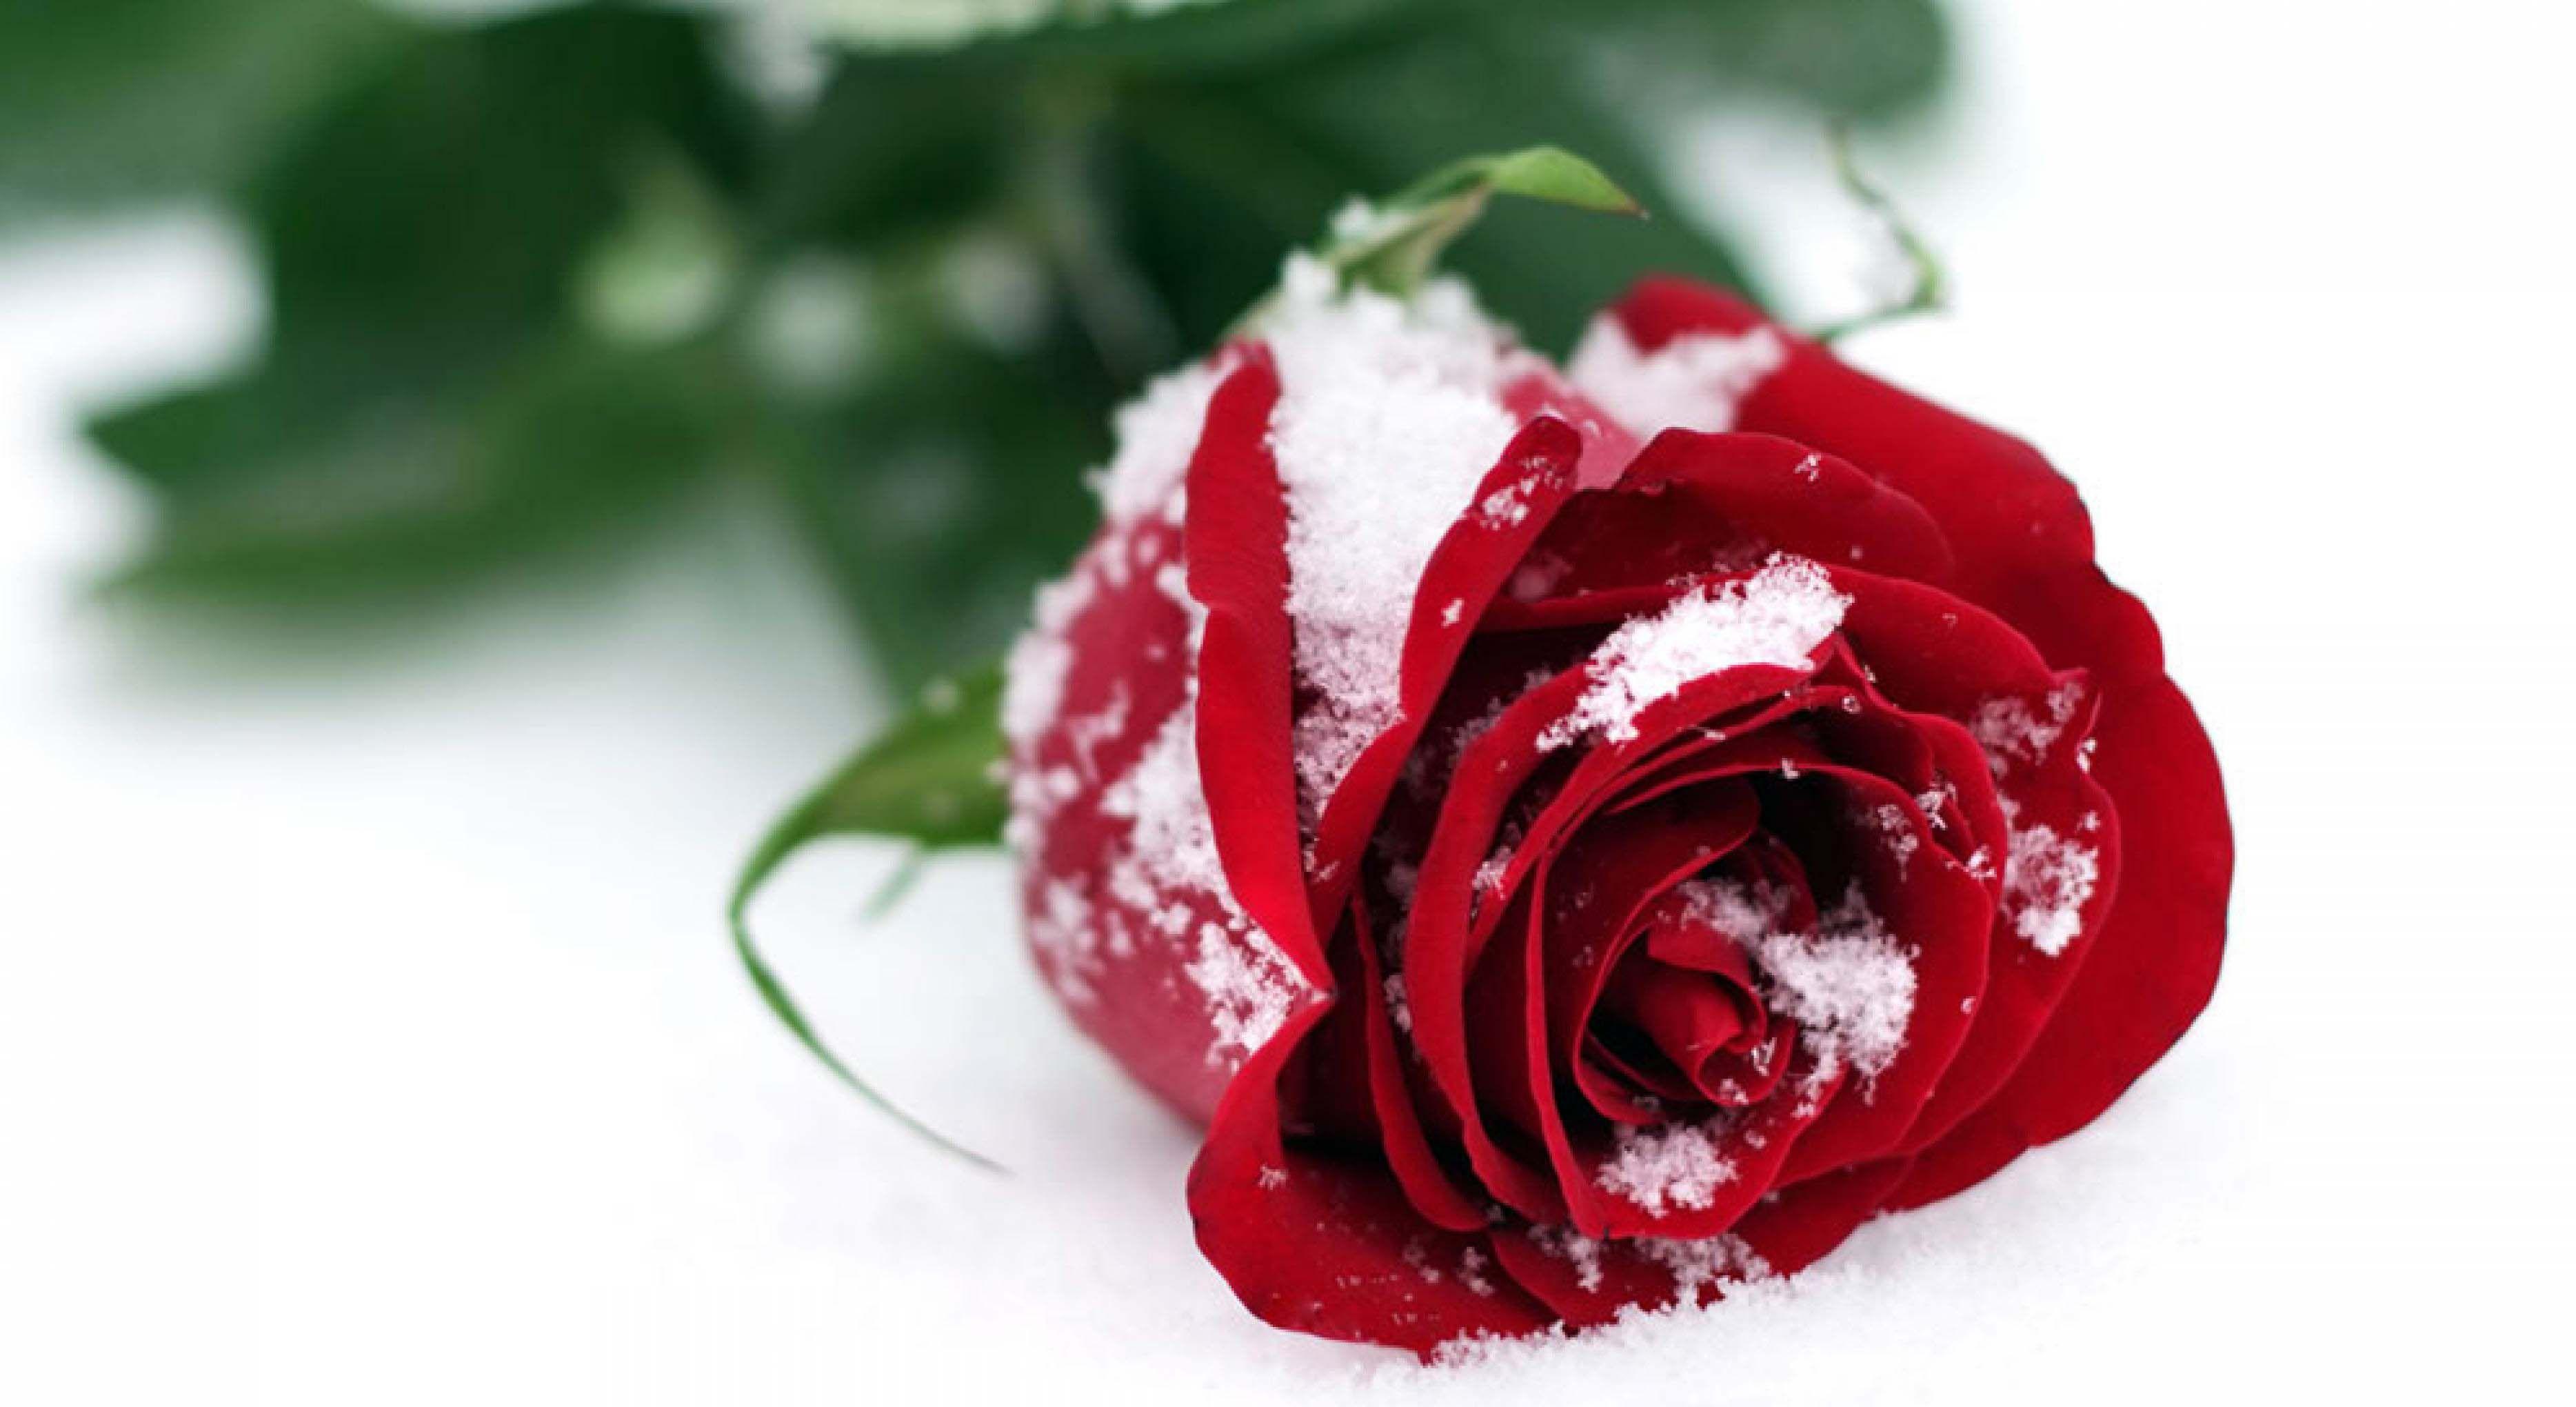 Winter Snow Rose Image HD Desktop Wallpaper. Rose flower